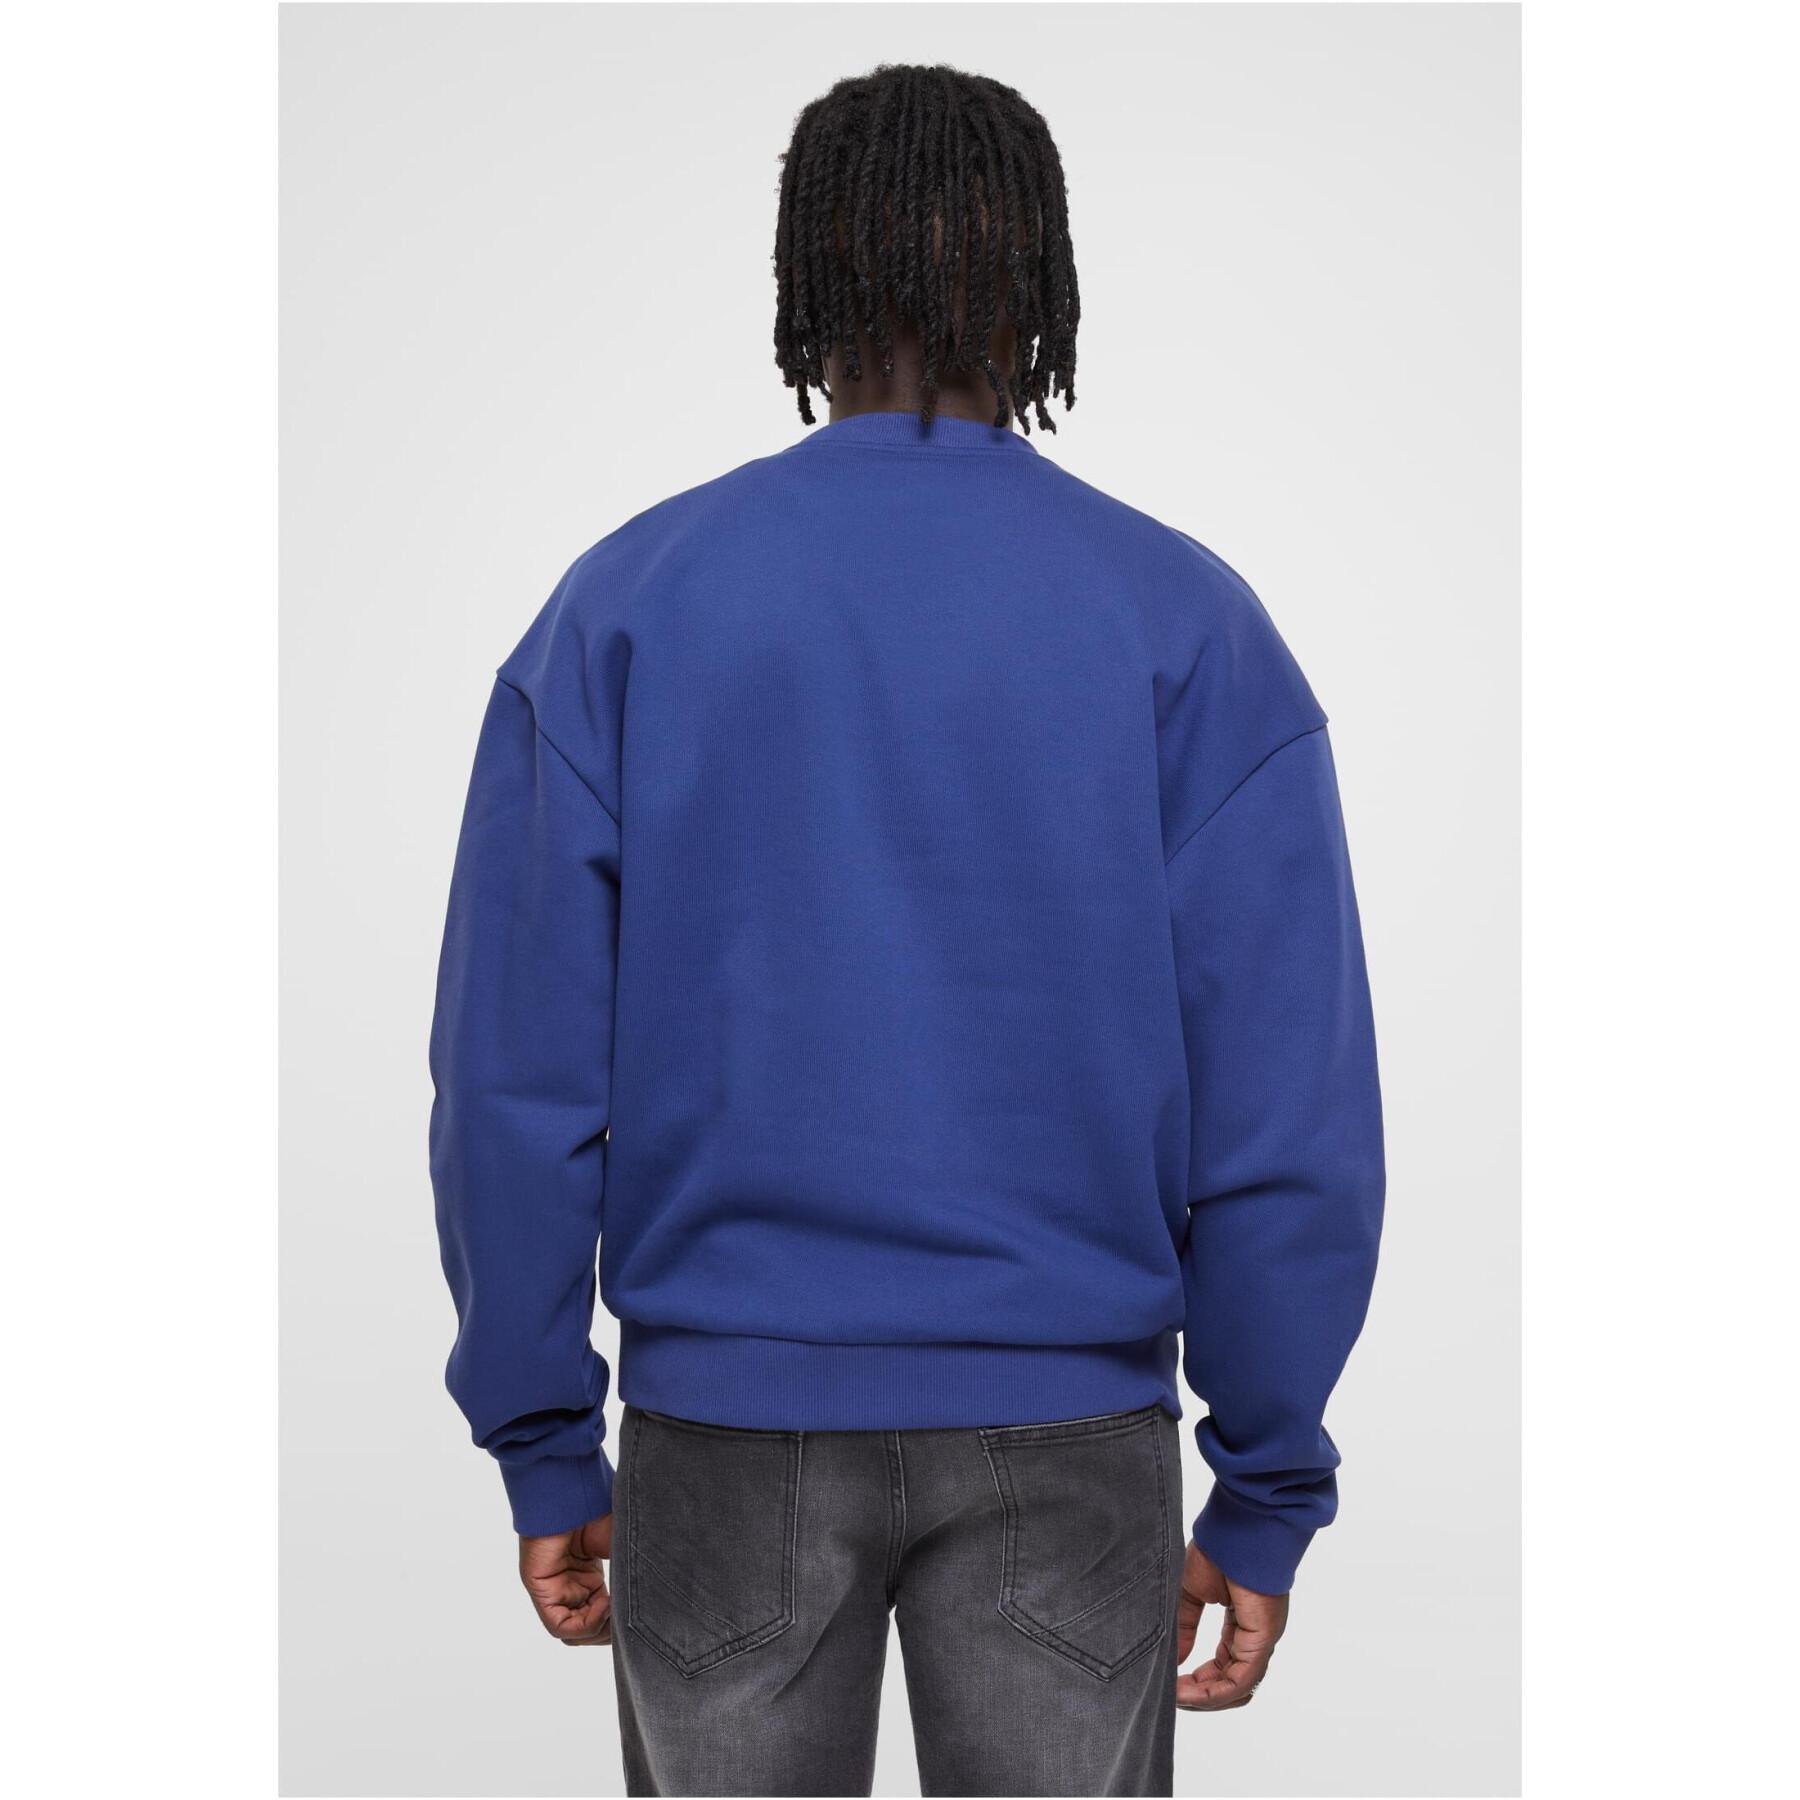 Sweatshirt thick round neck large sizes Urban Classics